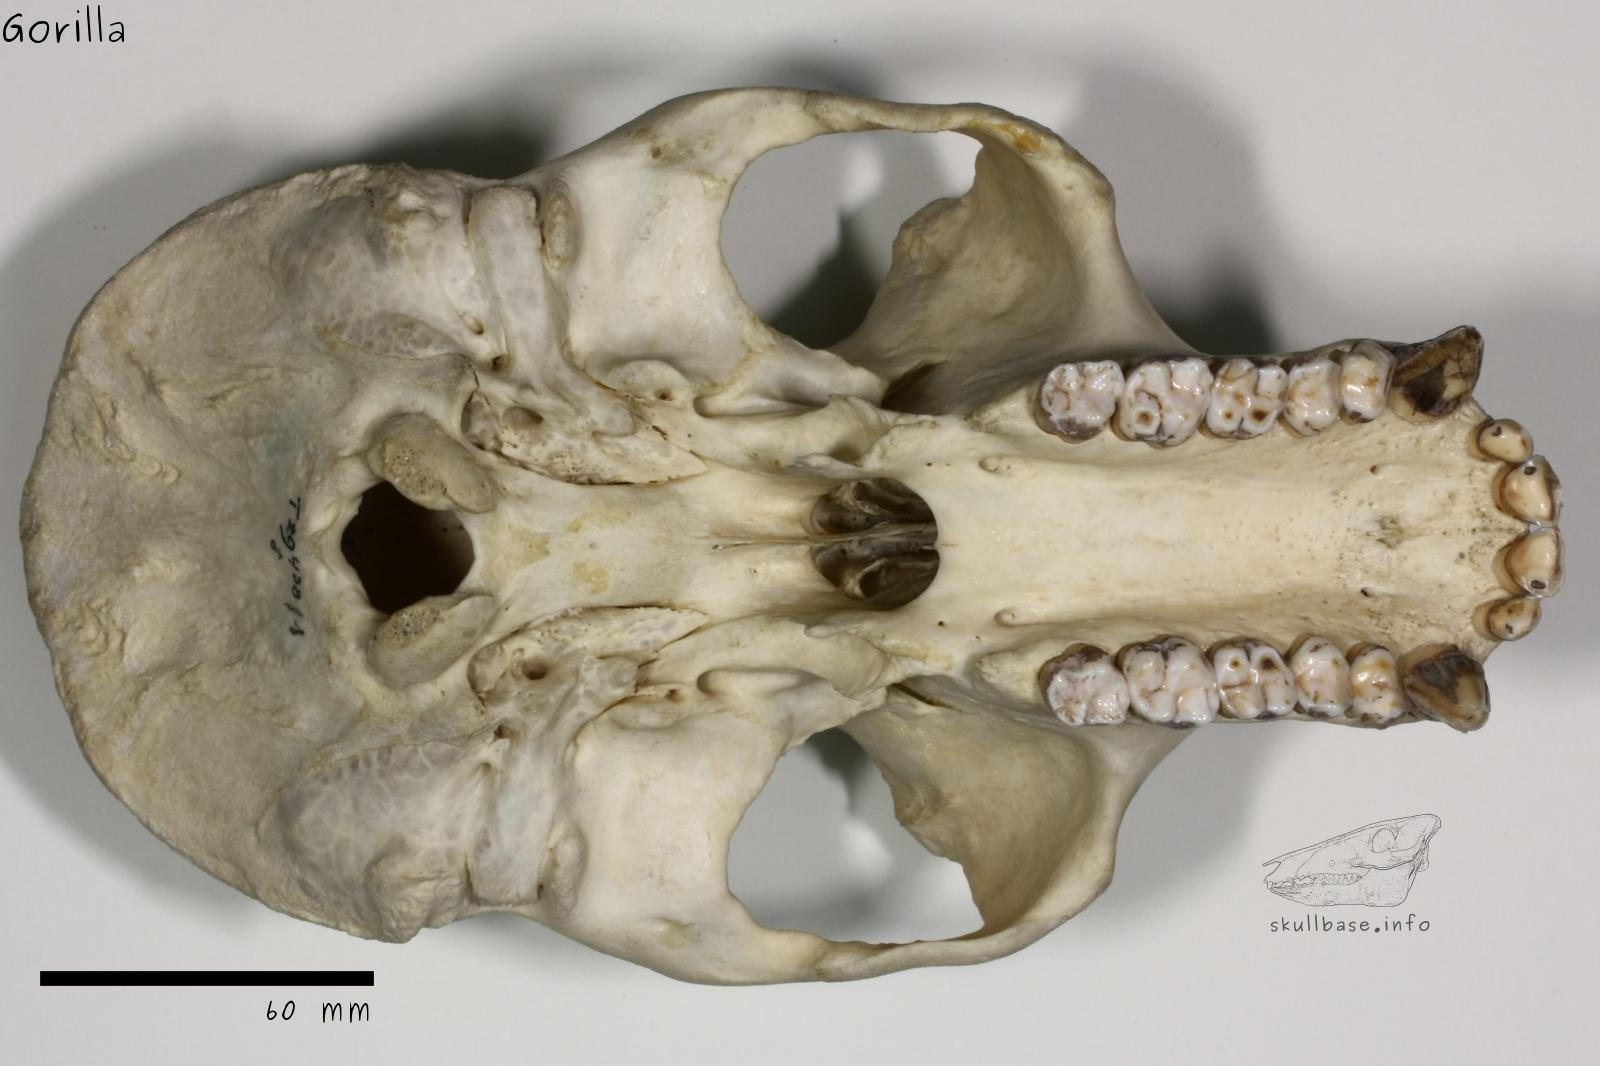 Gorilla (Gorilla gorilla) skull ventral view